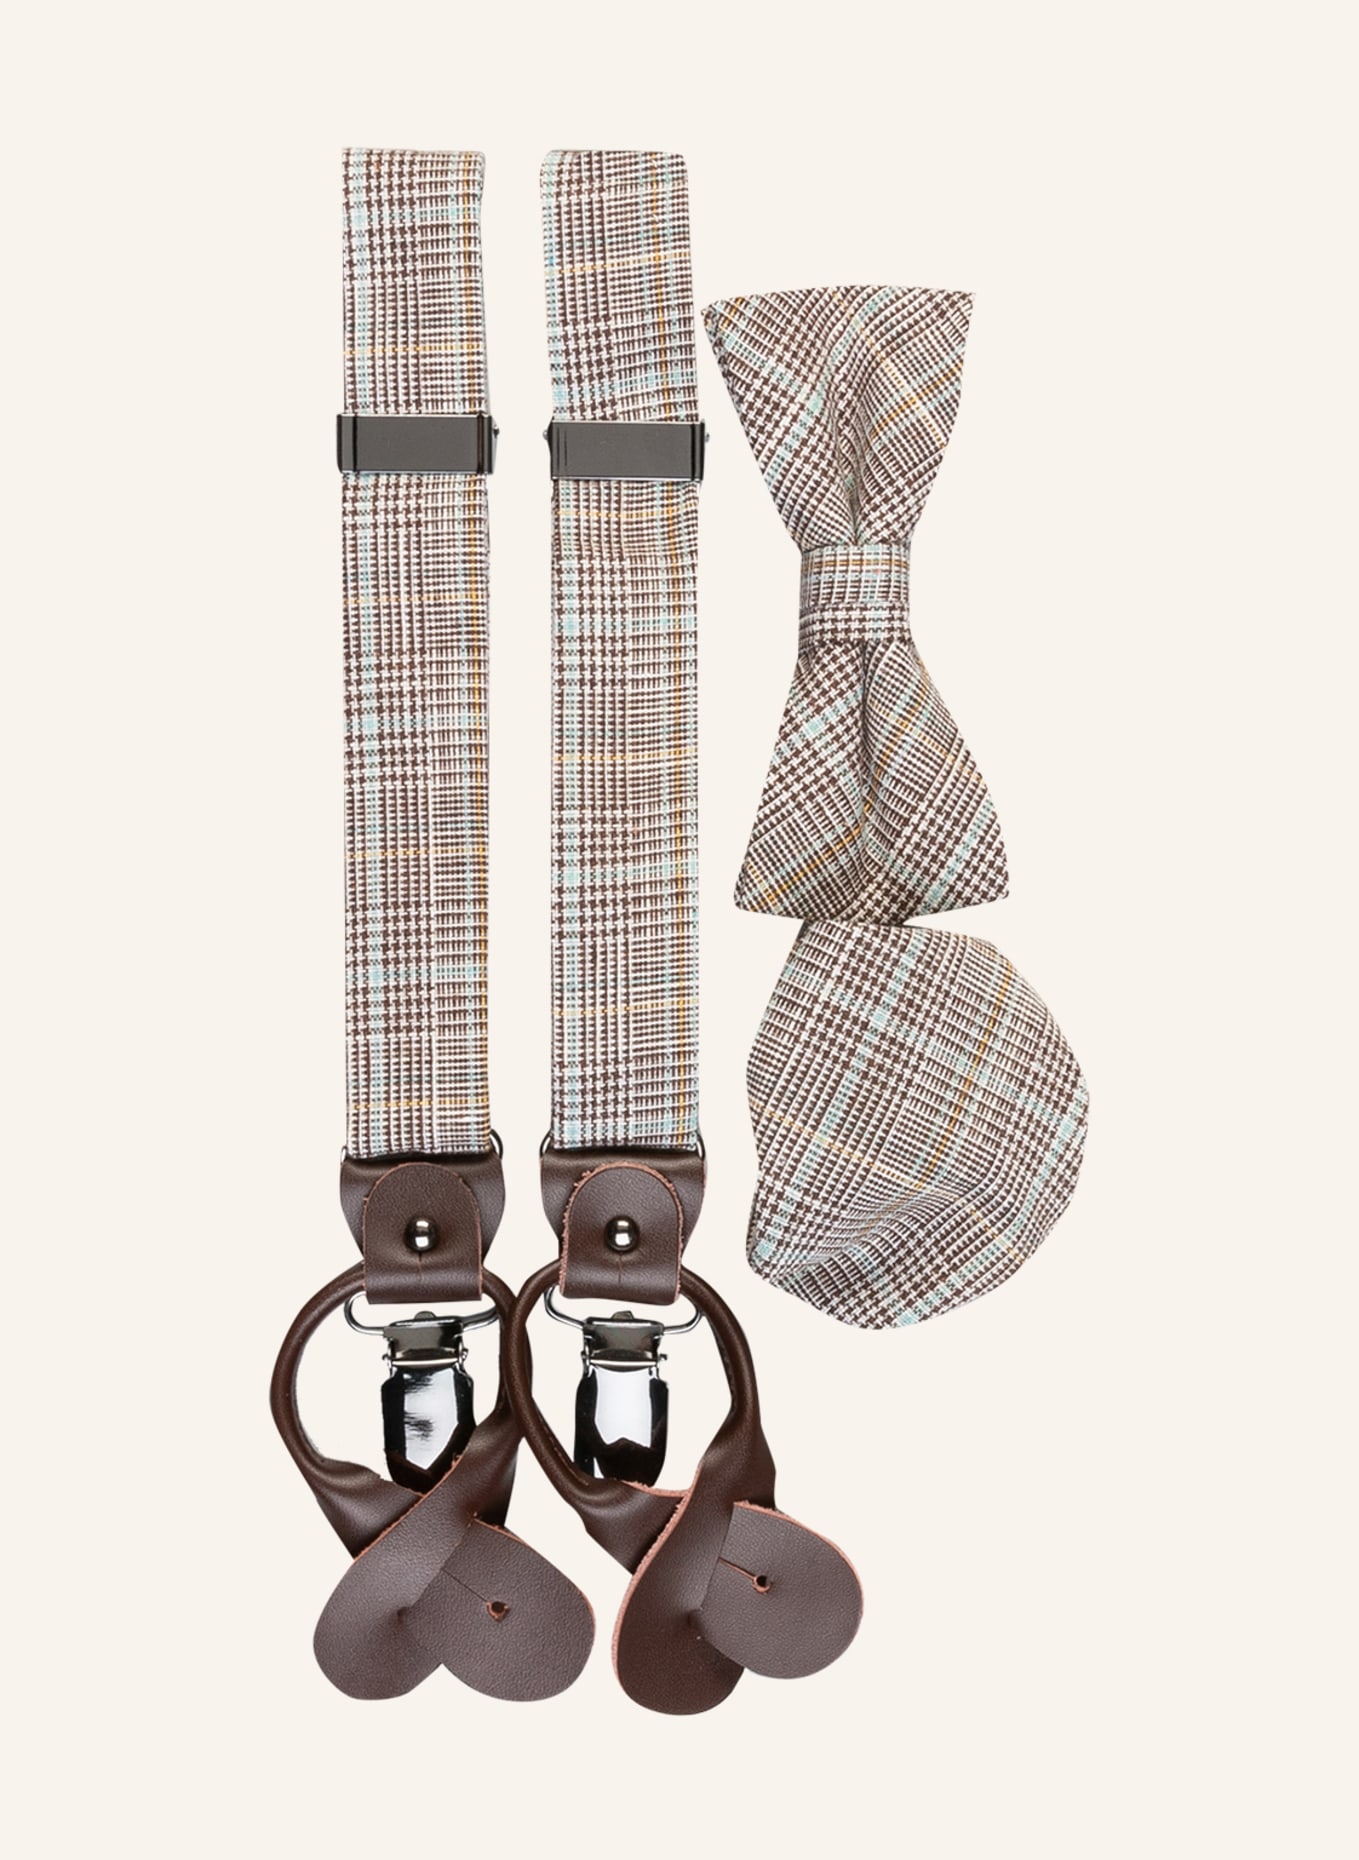 MONTI Set SANDRO: Suspenders, in and bow tie handkerchief brown/ pocket mint white/ dark